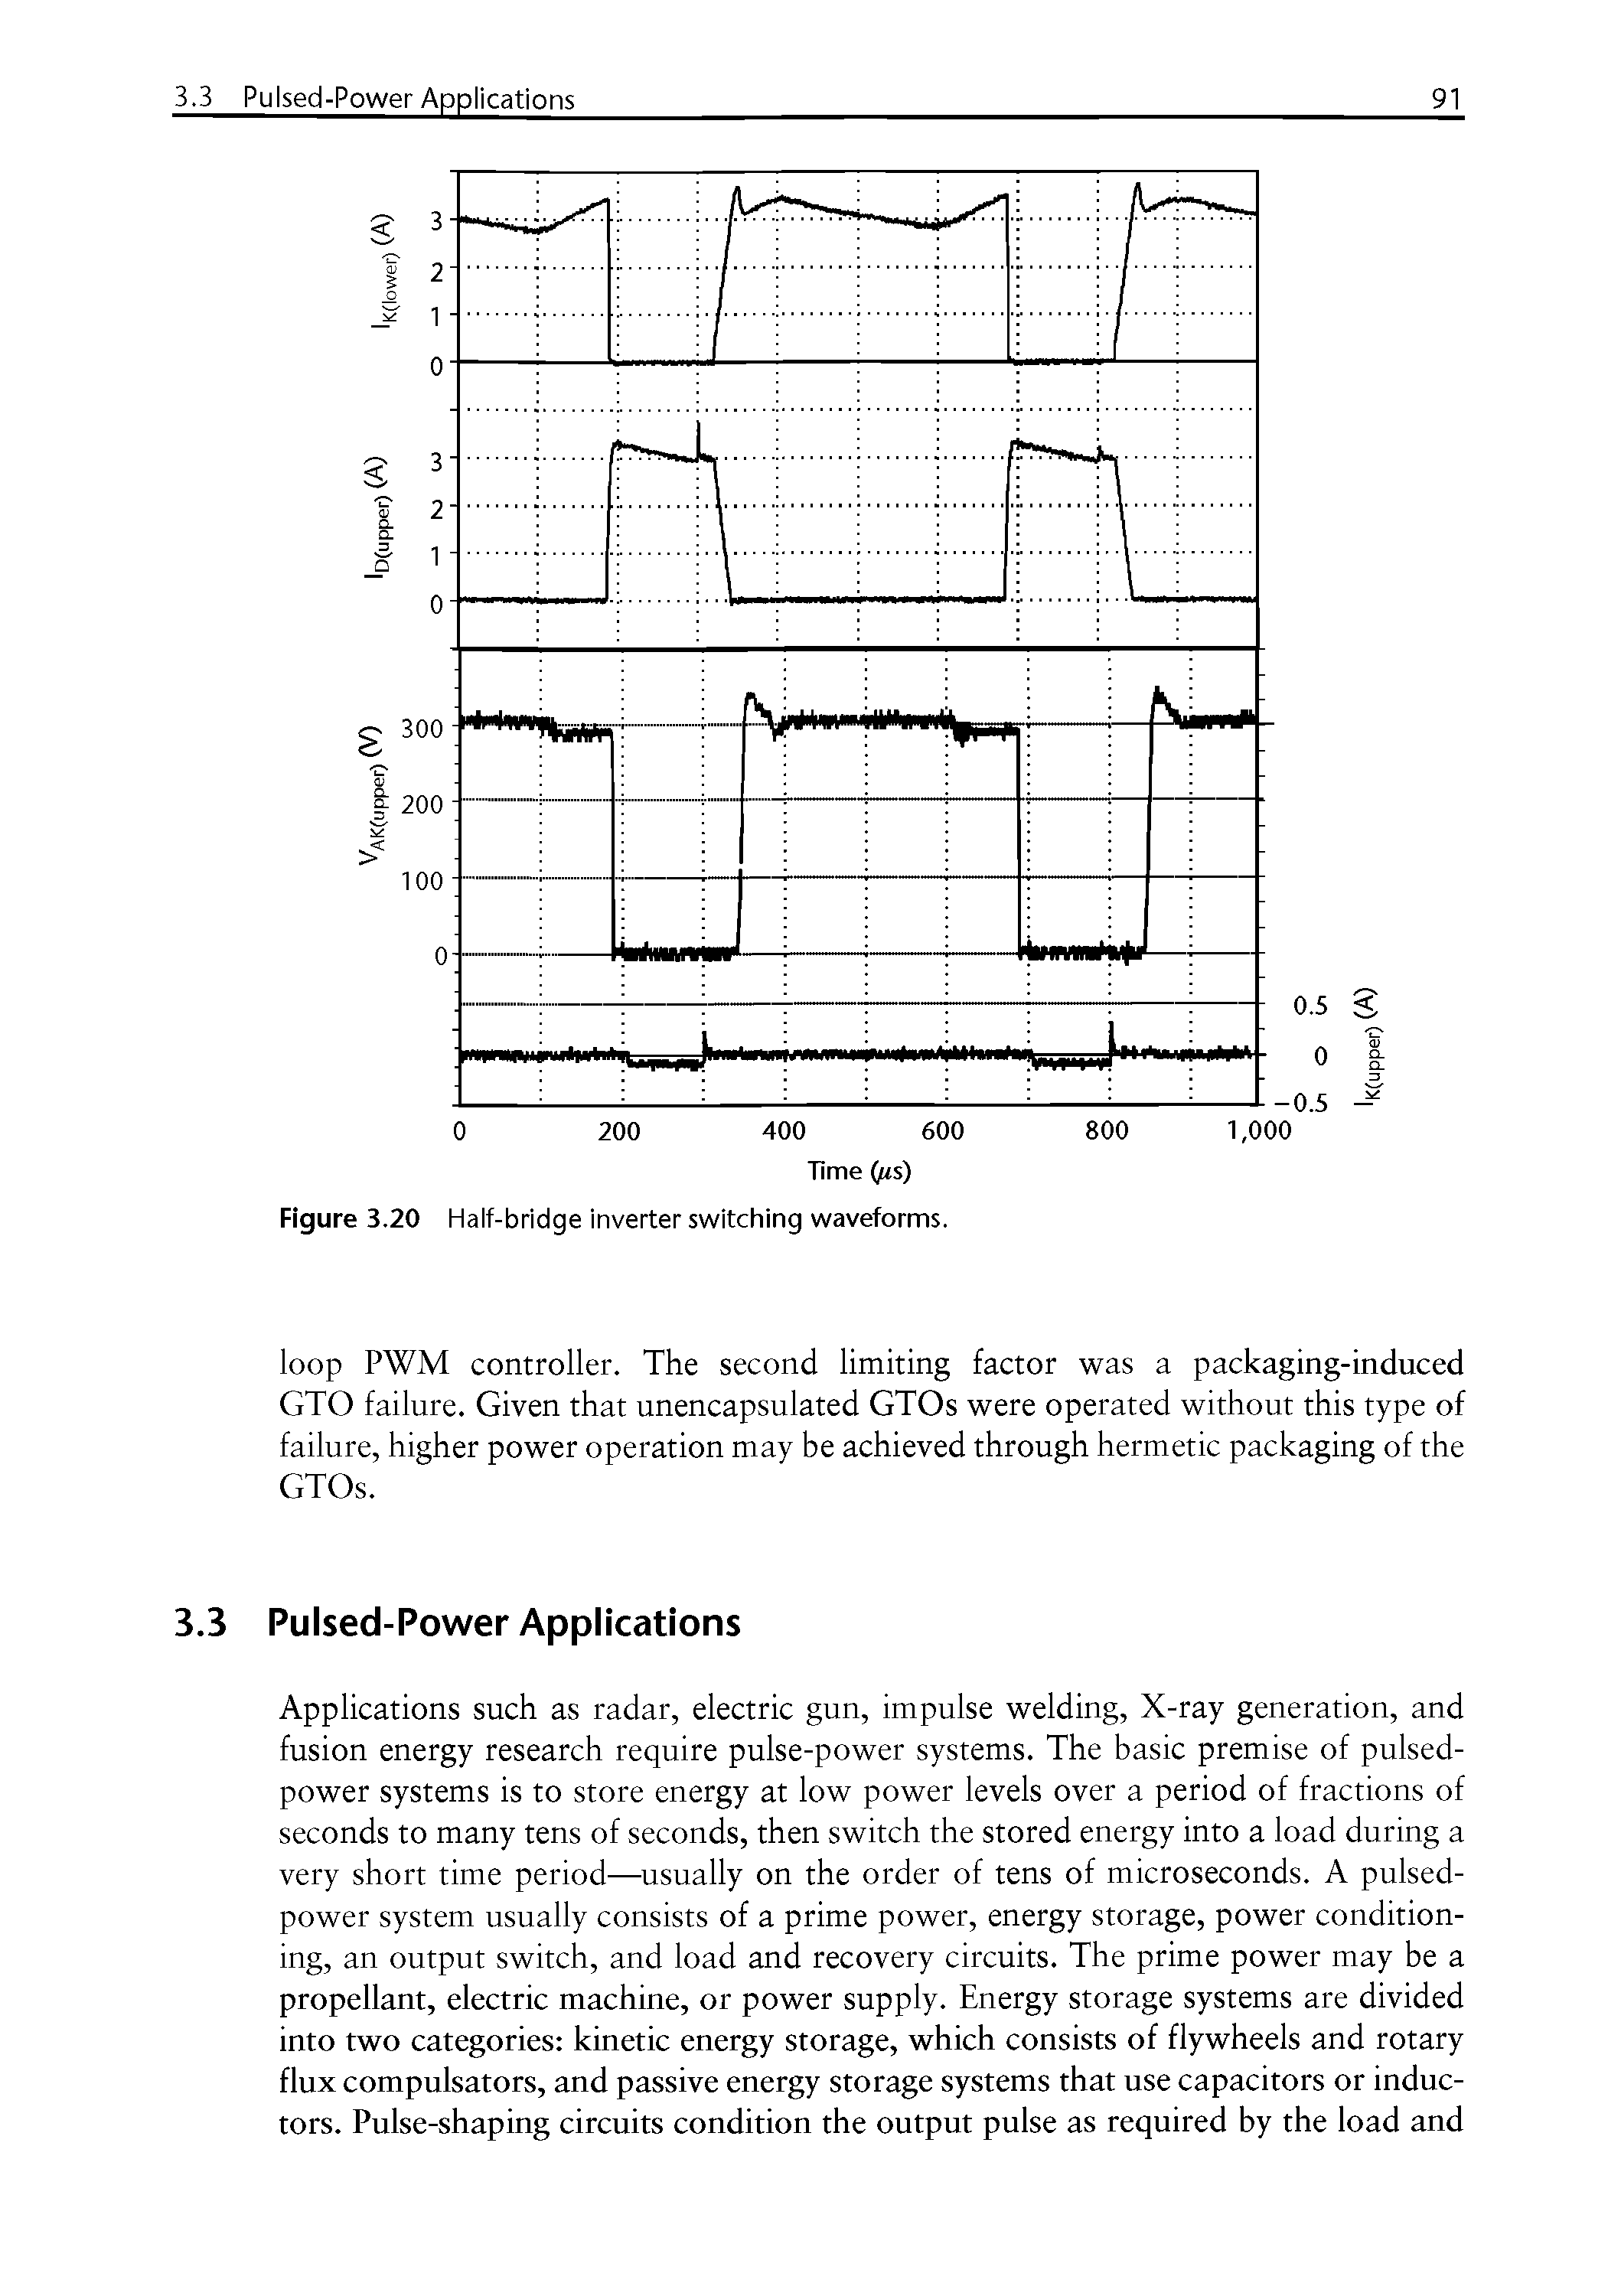 Figure 3.20 Half-bridge inverter switching waveforms.